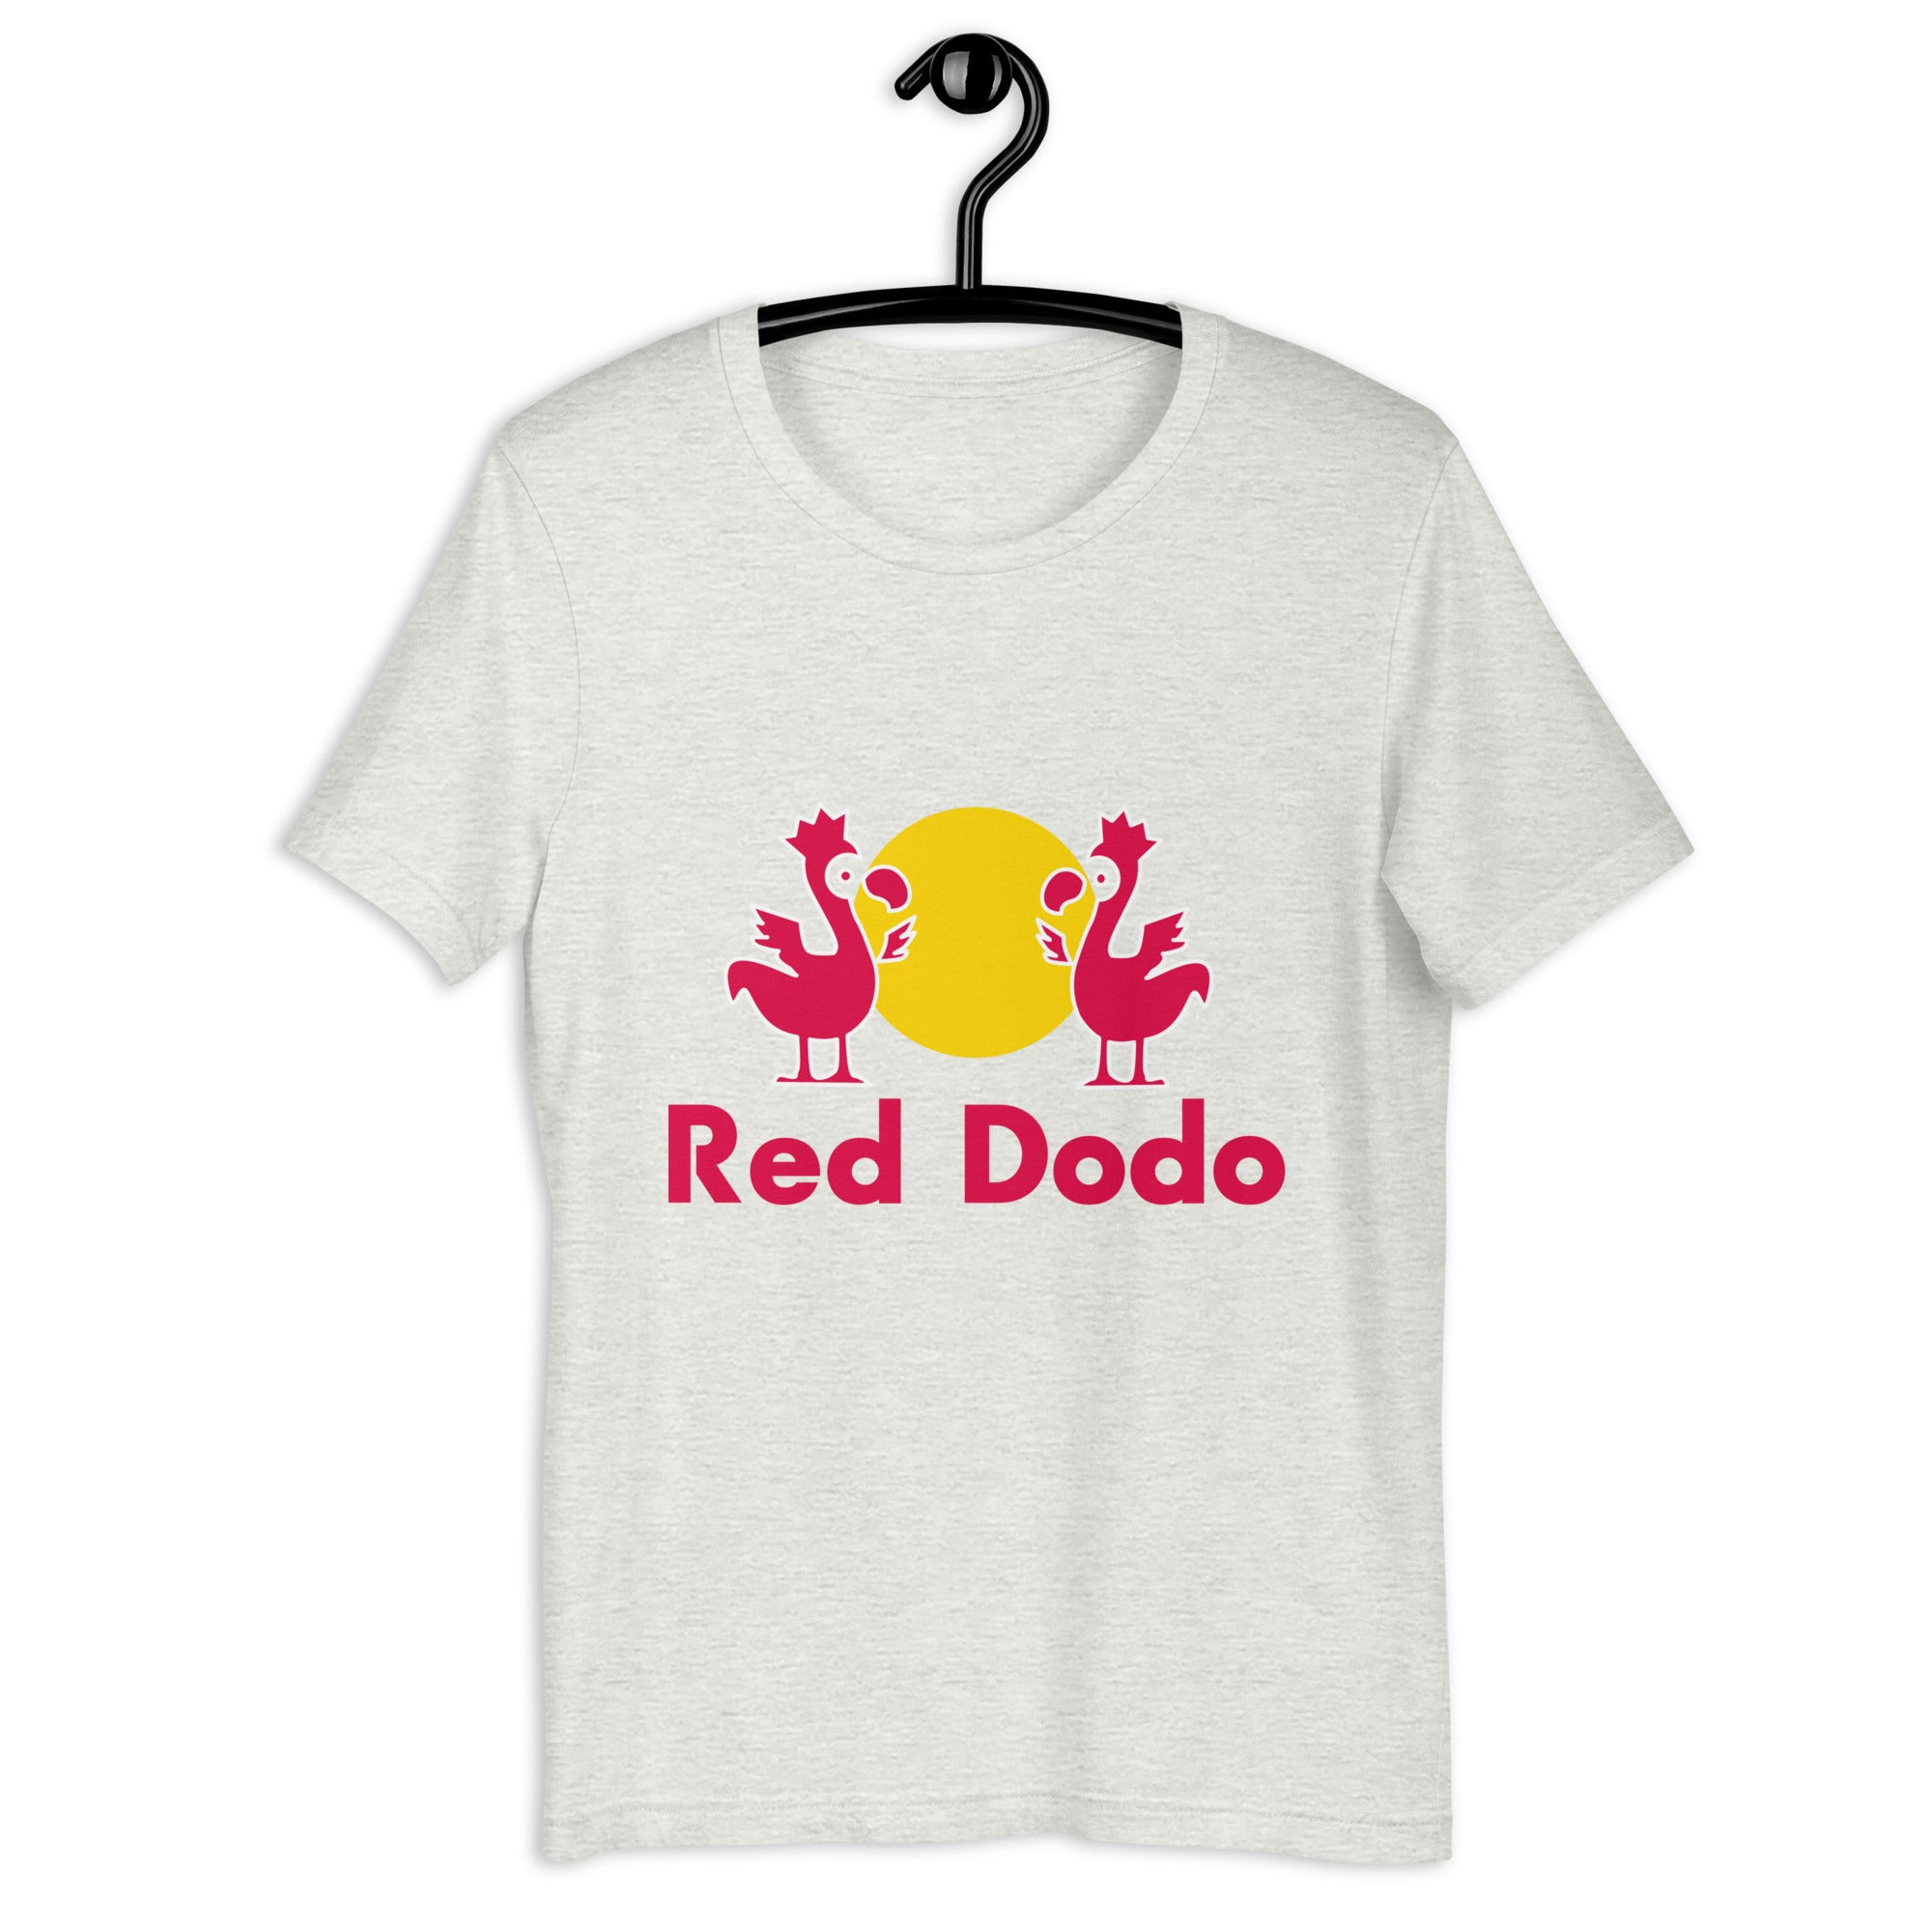 RED DODO